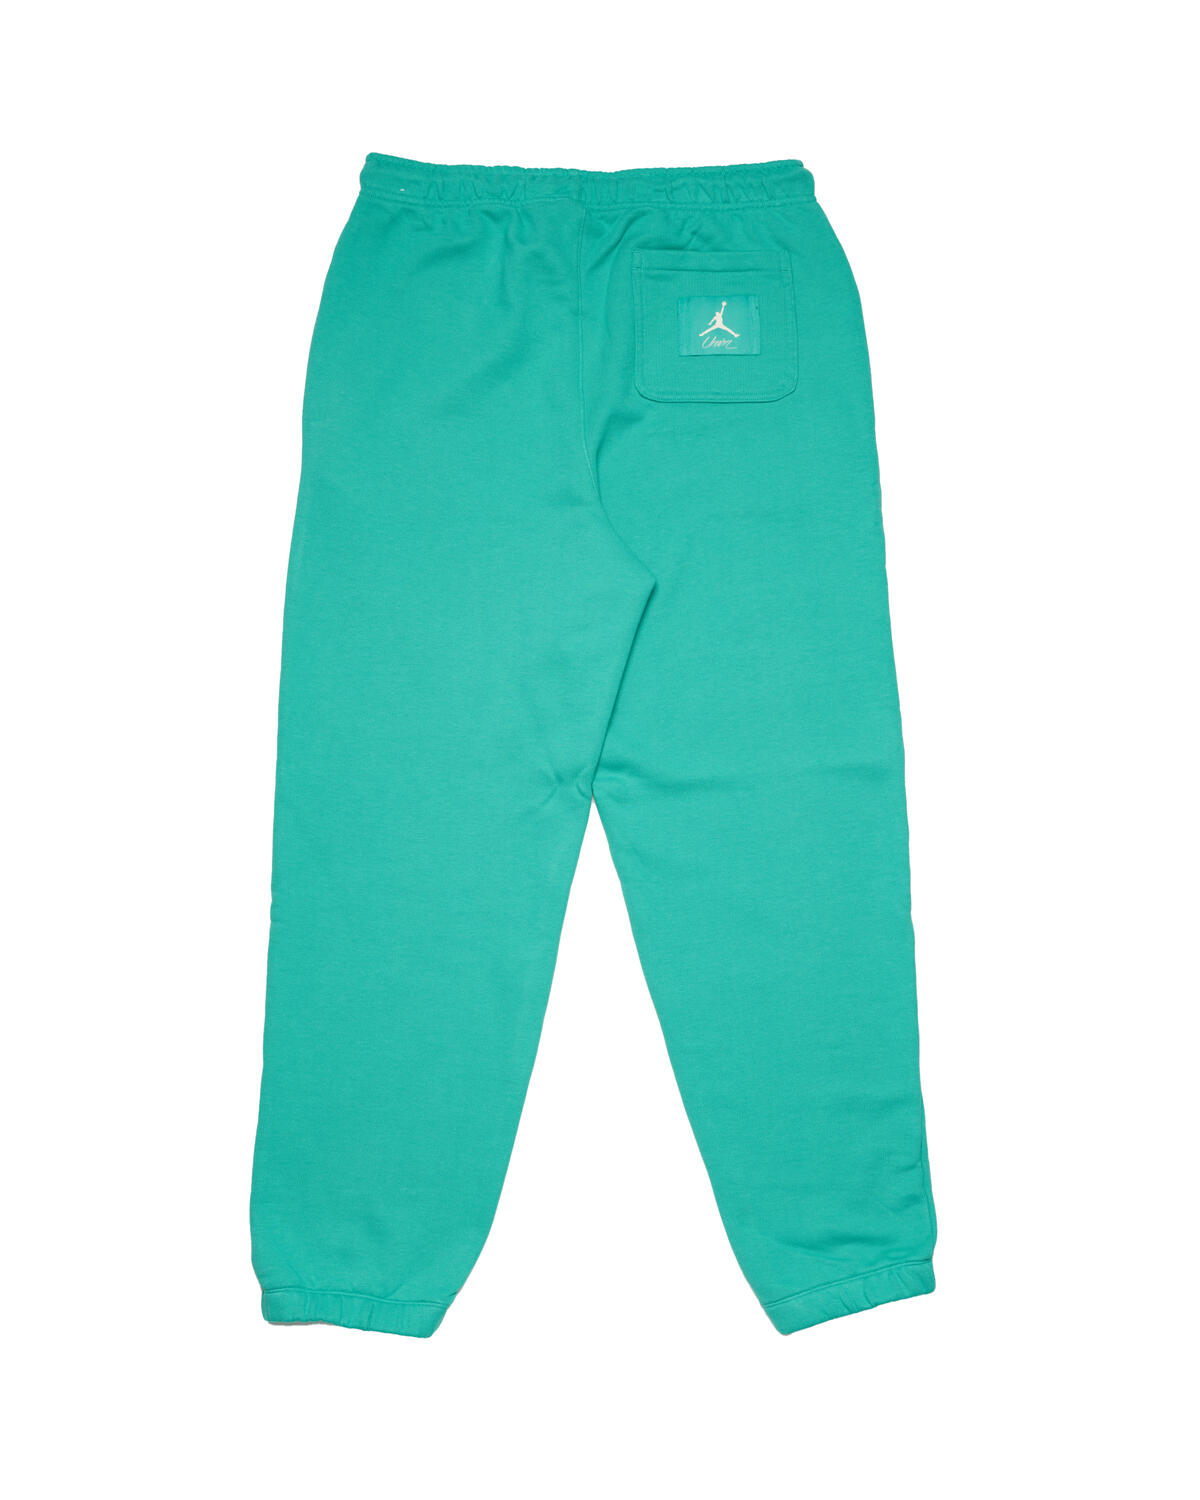 【Green / S】Jordan x UNION Fleece Pants